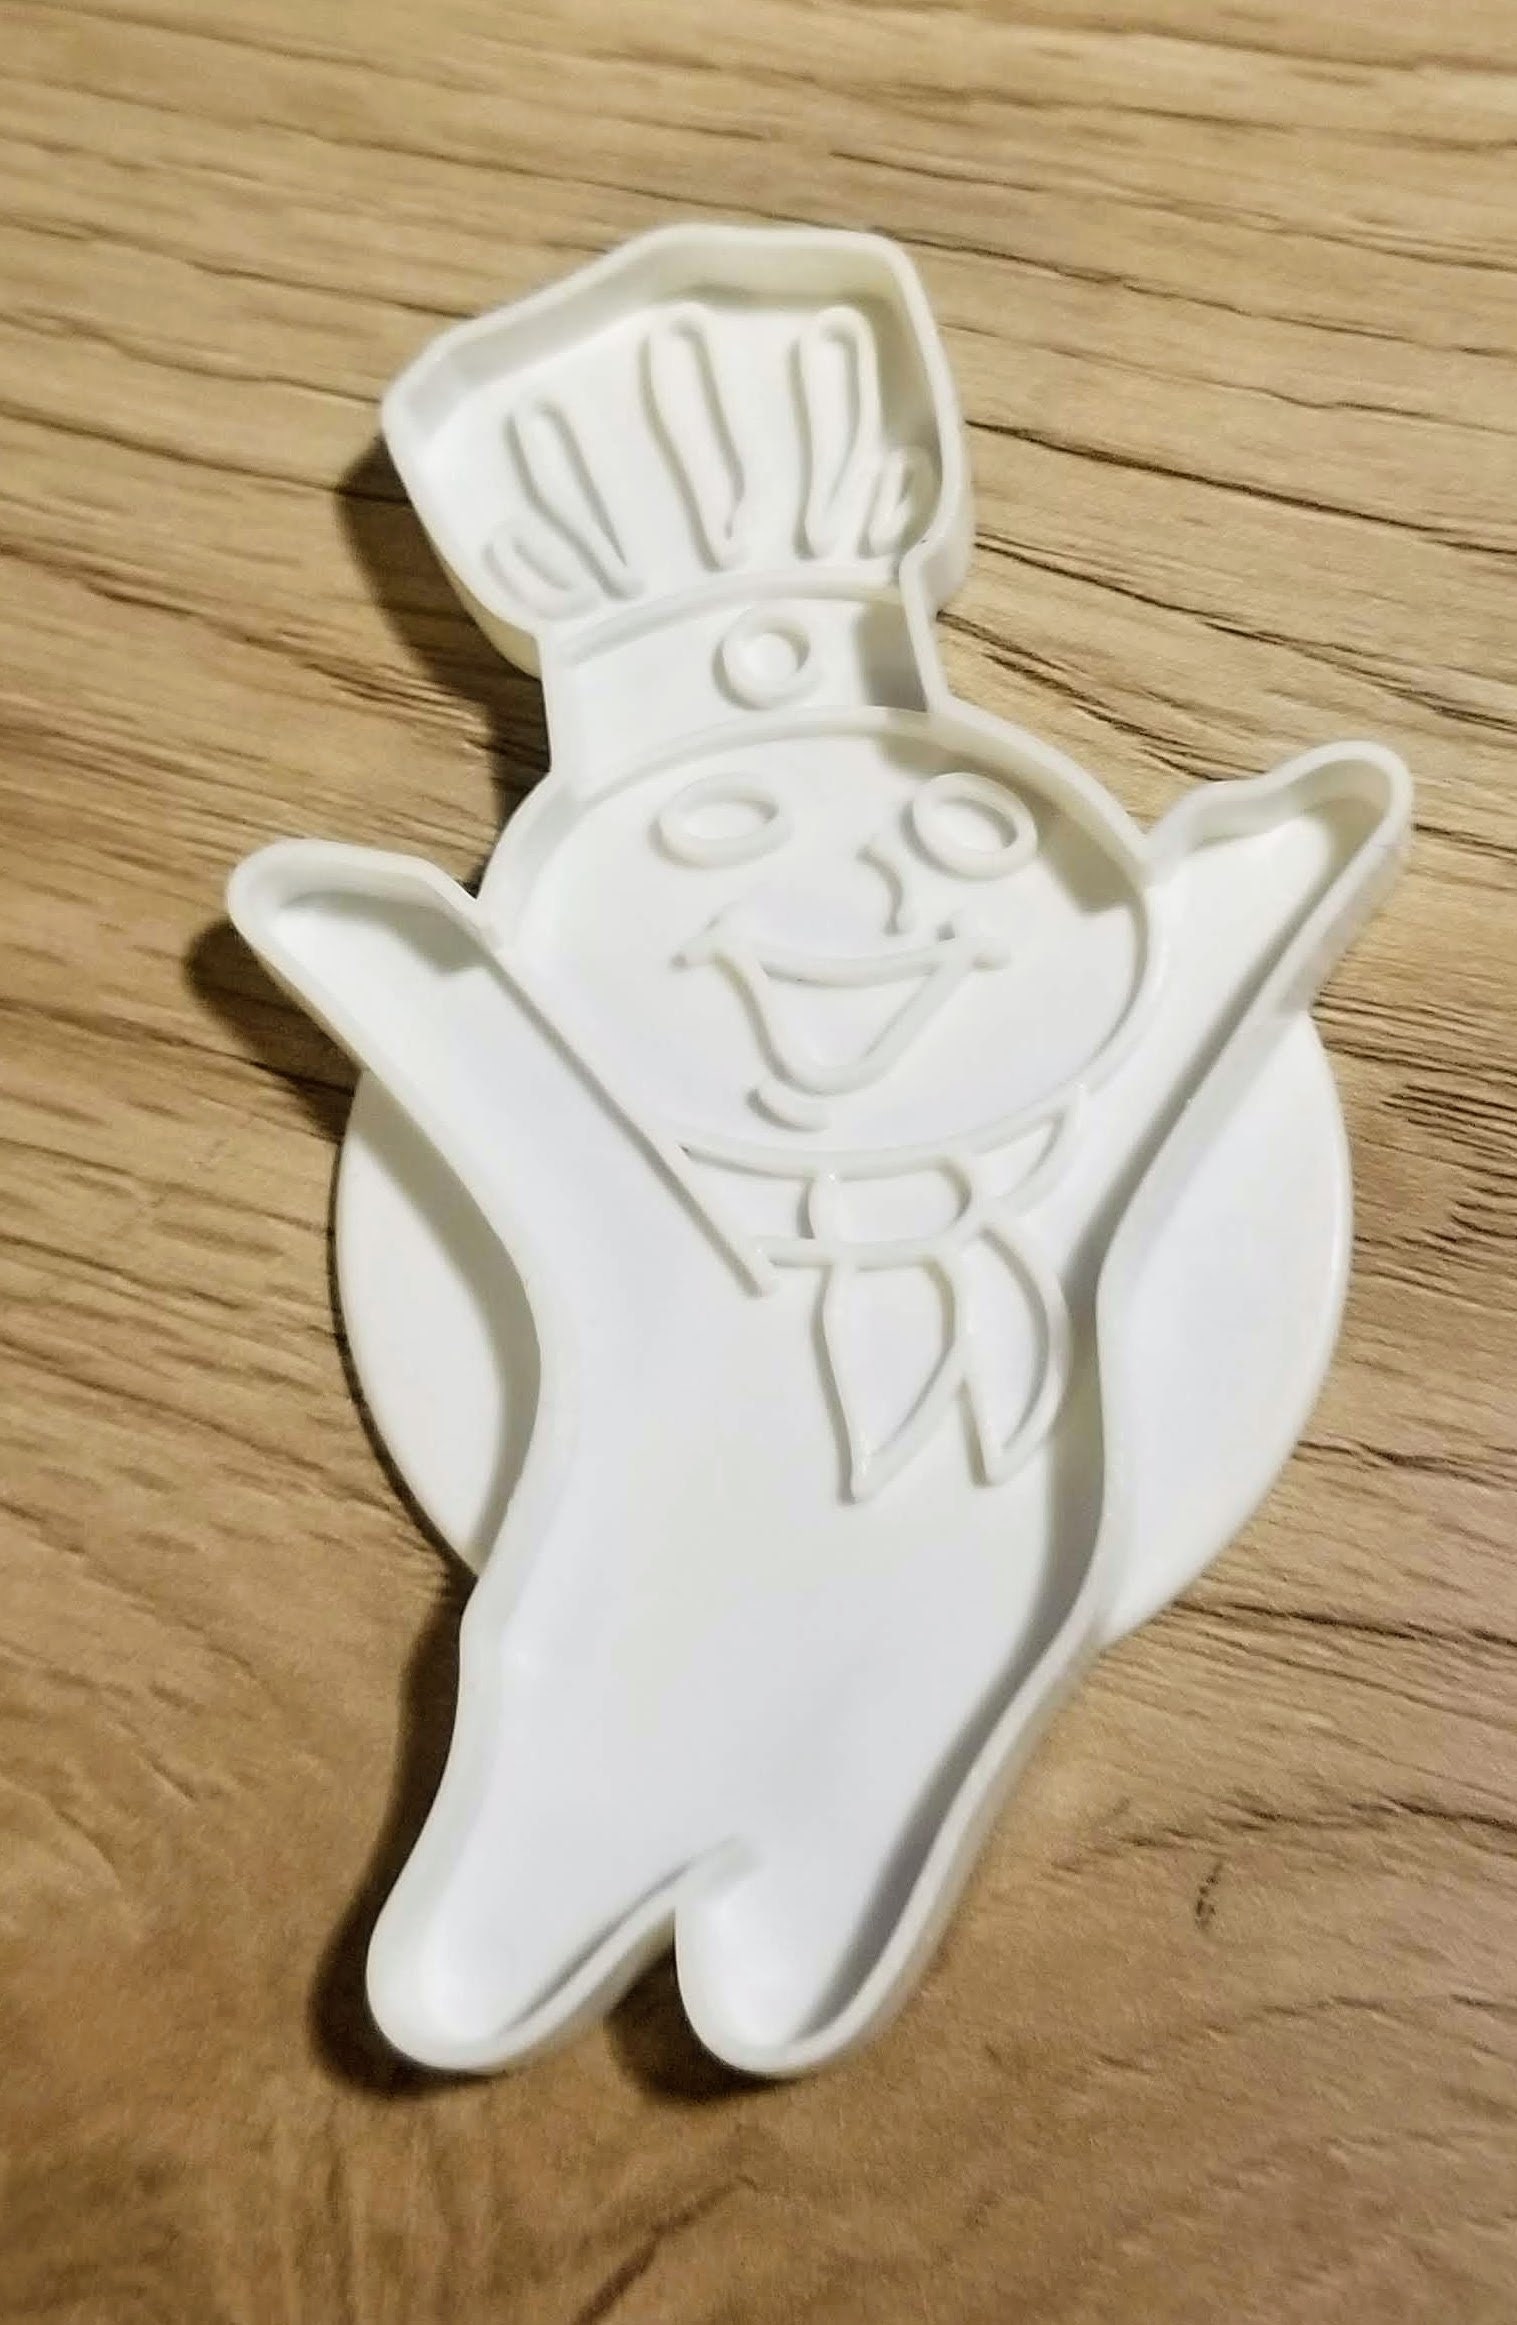 Pillsbury Doughboy Bakery Baking Set Children's Play Toy Cookie Cutter Tin  Mit